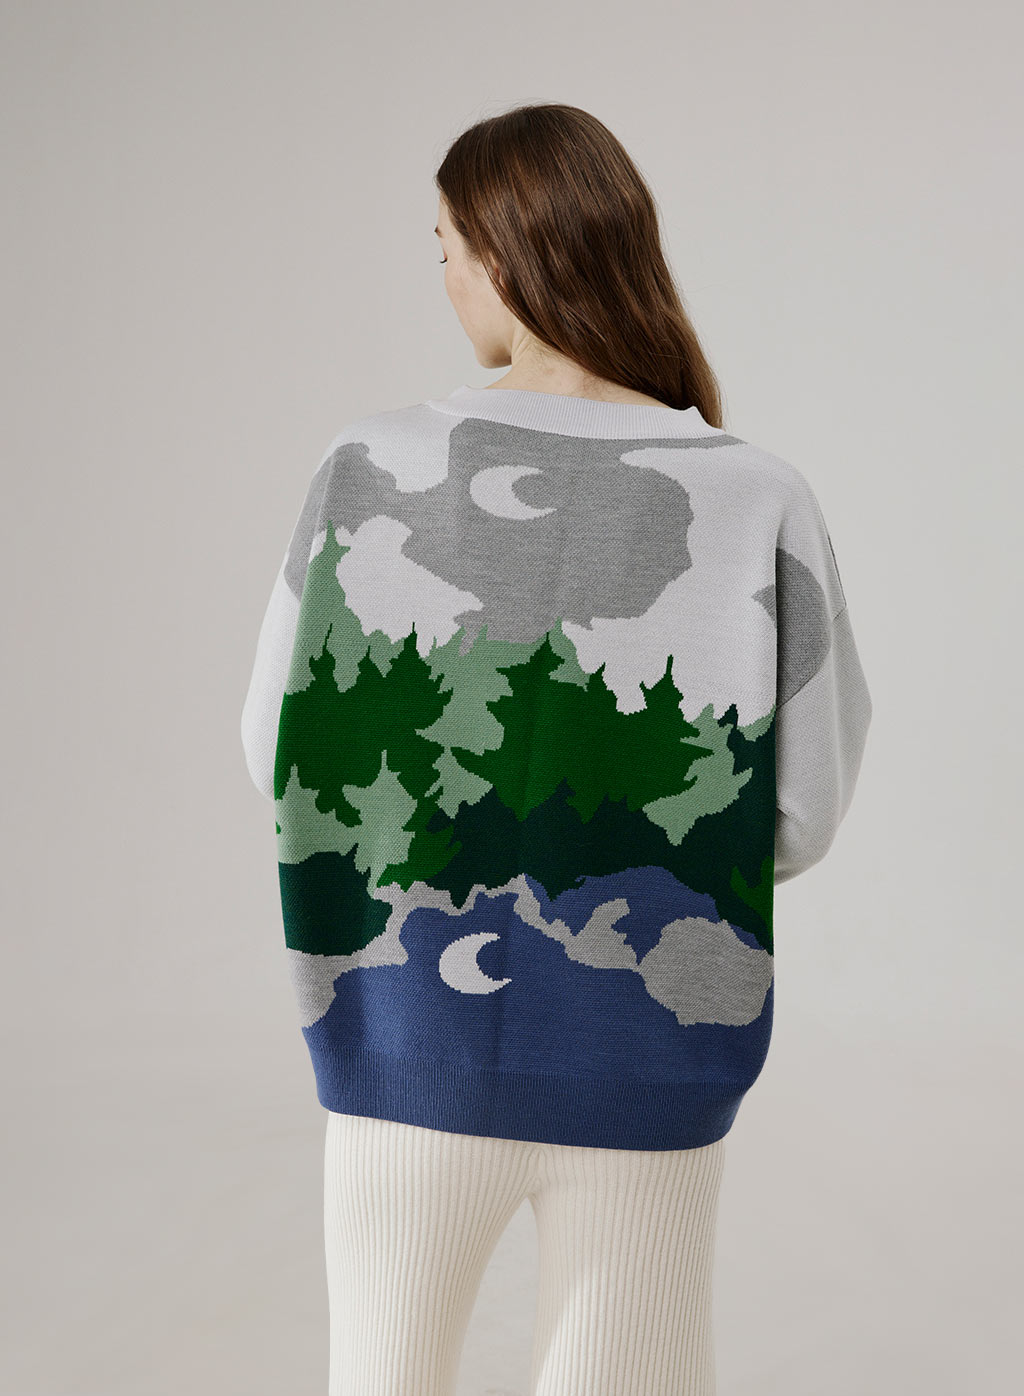 discount 99% Green 12Y Urban knits jumper KIDS FASHION Jumpers & Sweatshirts Knitted 